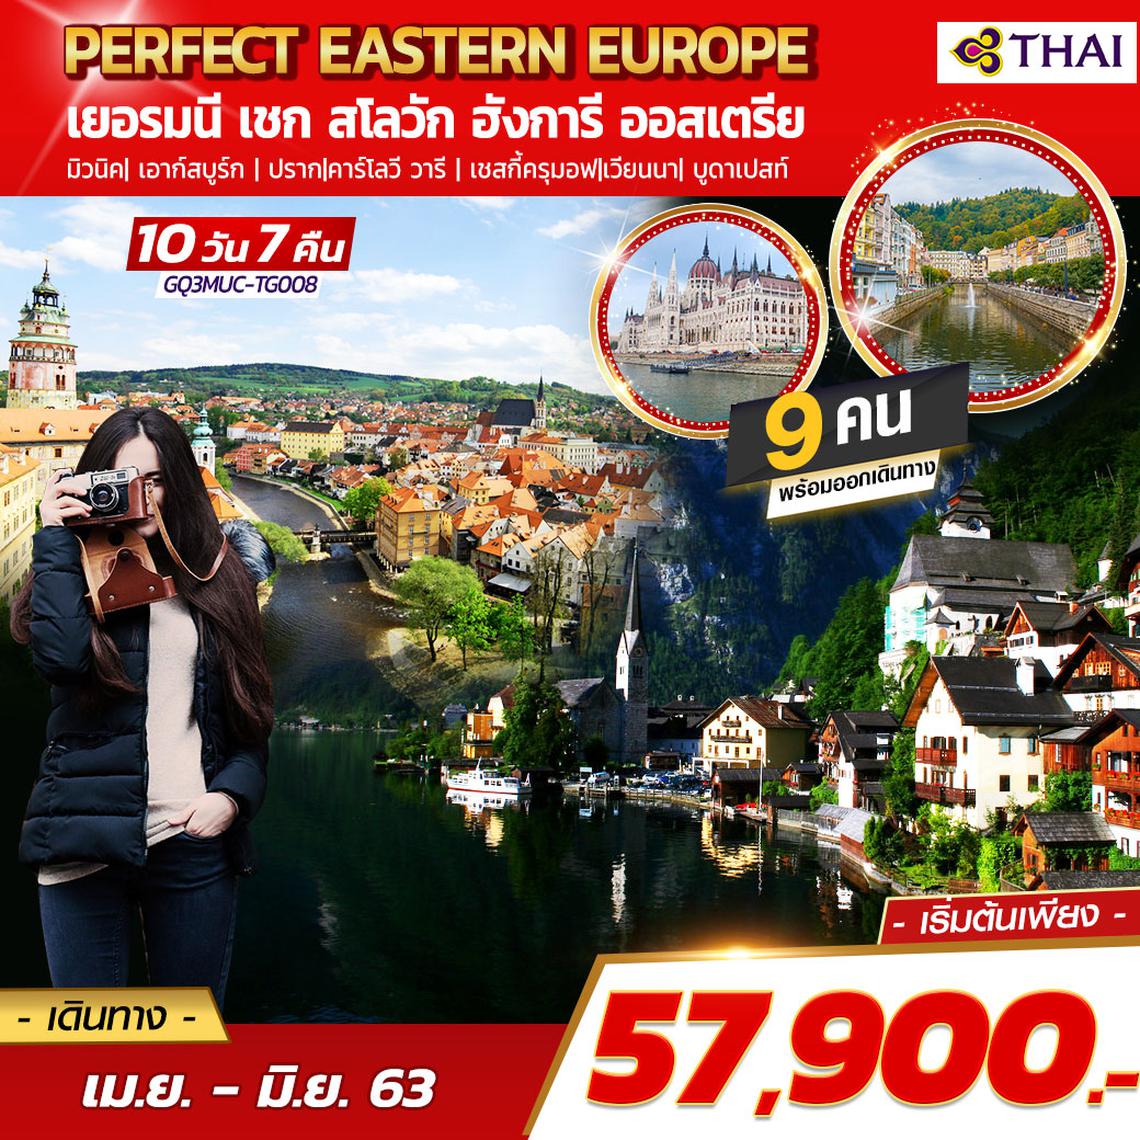 PERFECT EASTERN EUROPE เยอรมนี – เชก – สโลวัก – ฮังการี – ออสเตรีย 10 วัน 7 คืน โดยสายการบินไทย (TG)